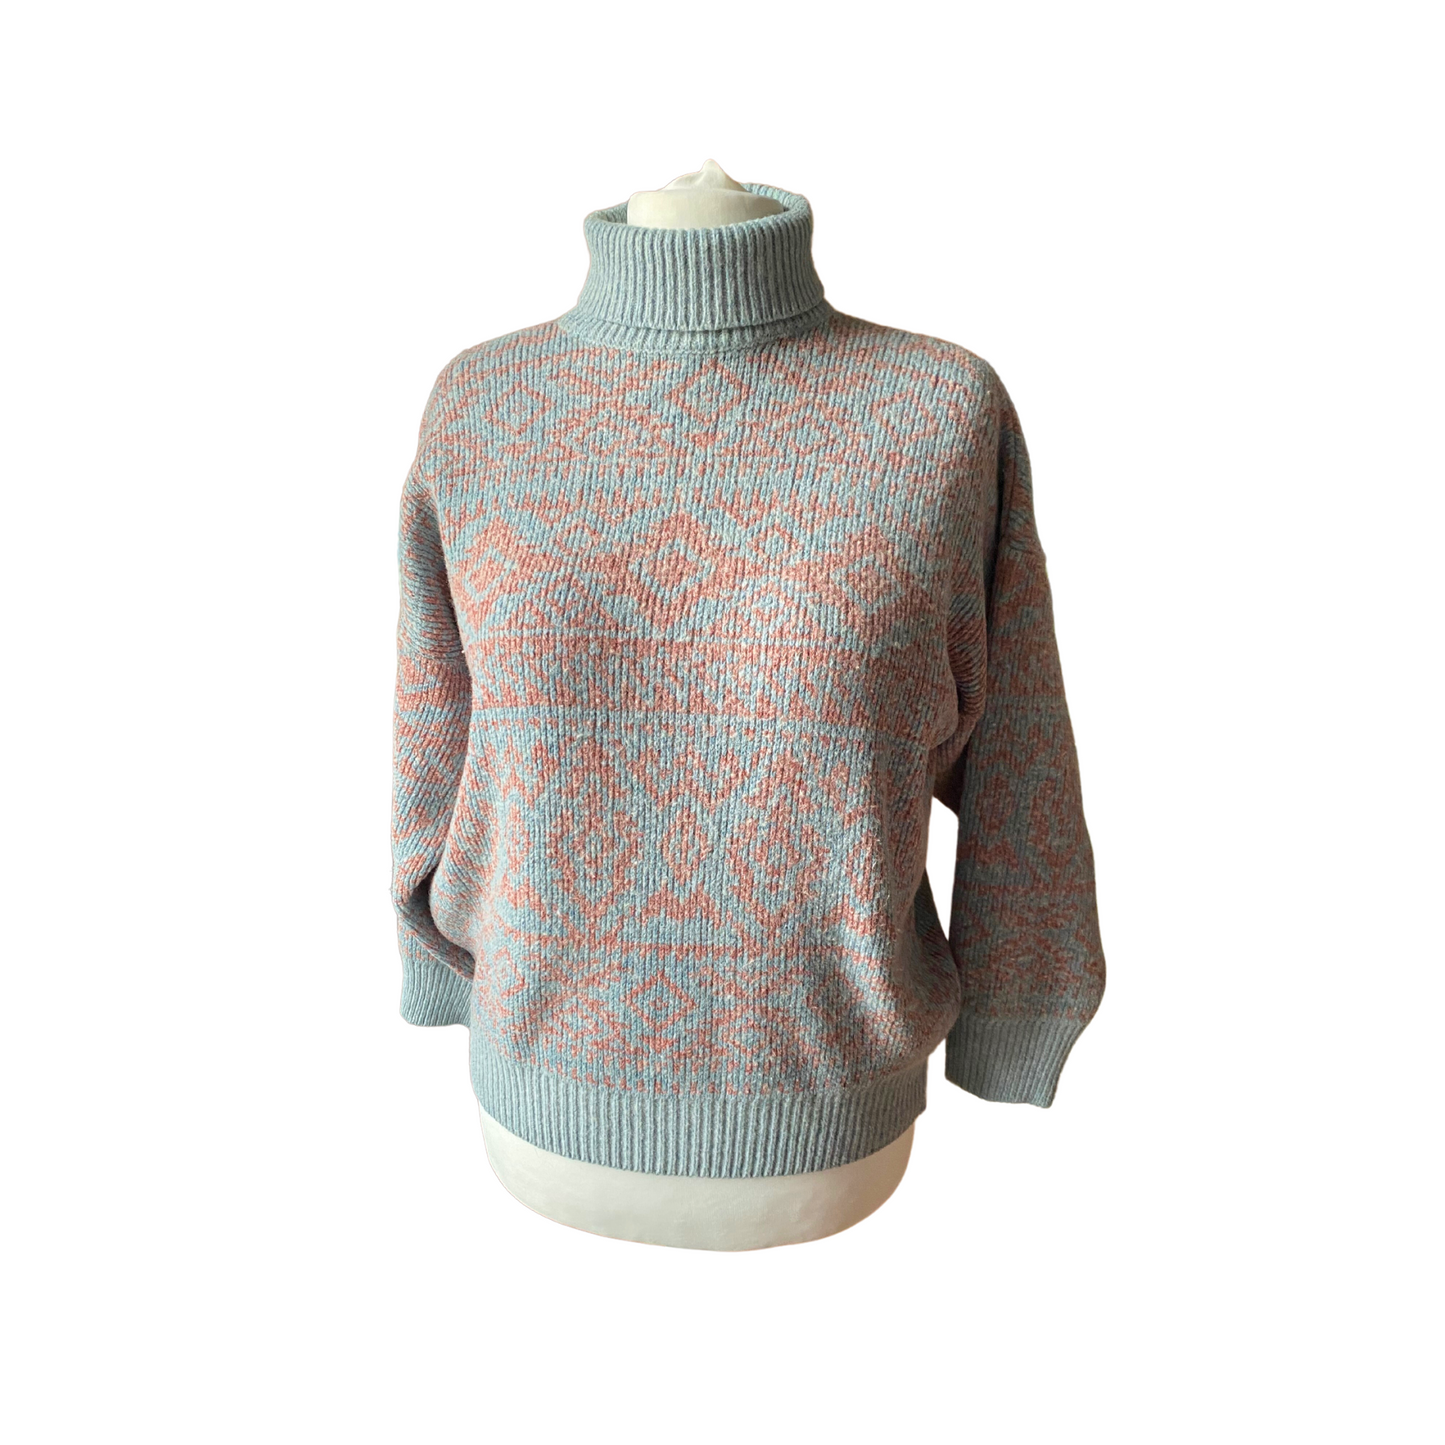 Vintage pale blue and pink roll neck jumper - wool blend sweater